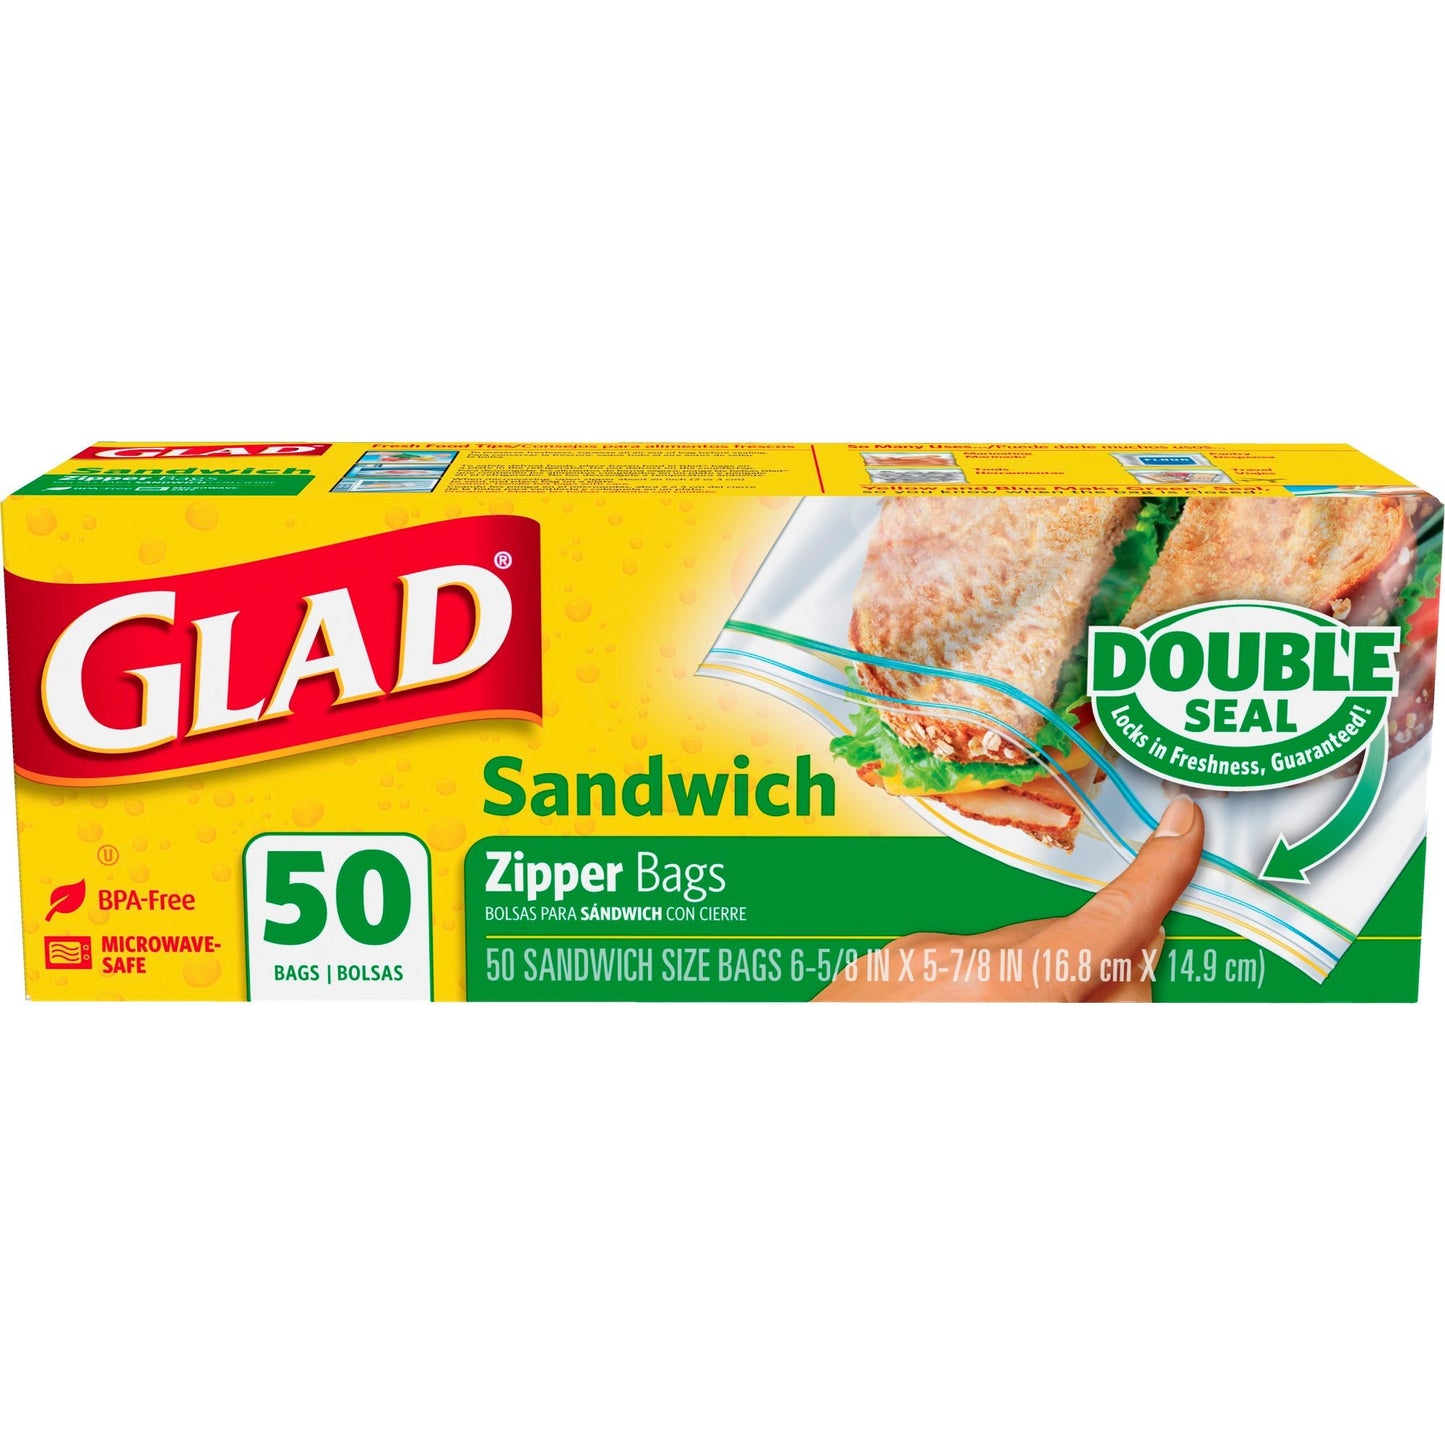 Glad Sandwich Zipper Bags